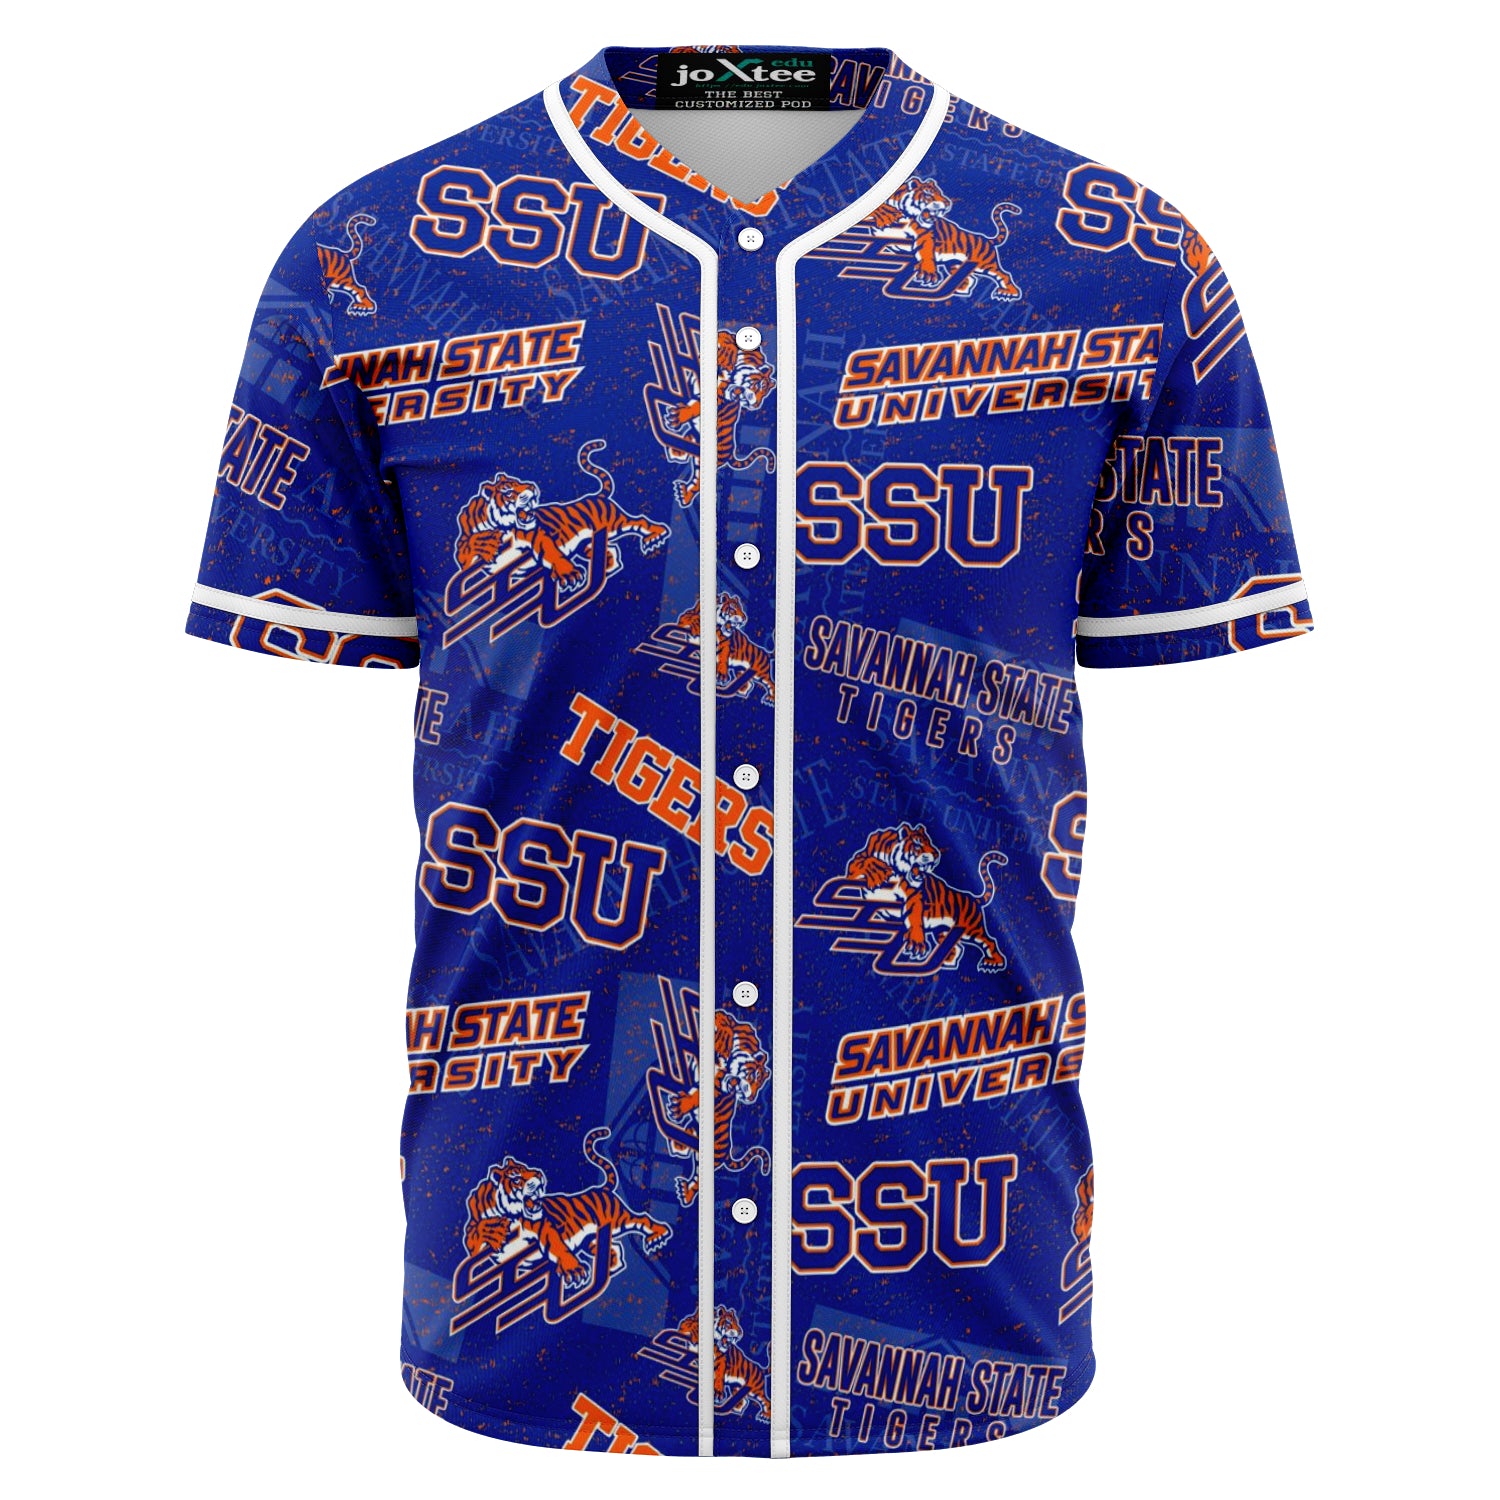 Rawlings Tigers Custom HexaFlex Baseball Jersey Design #2B